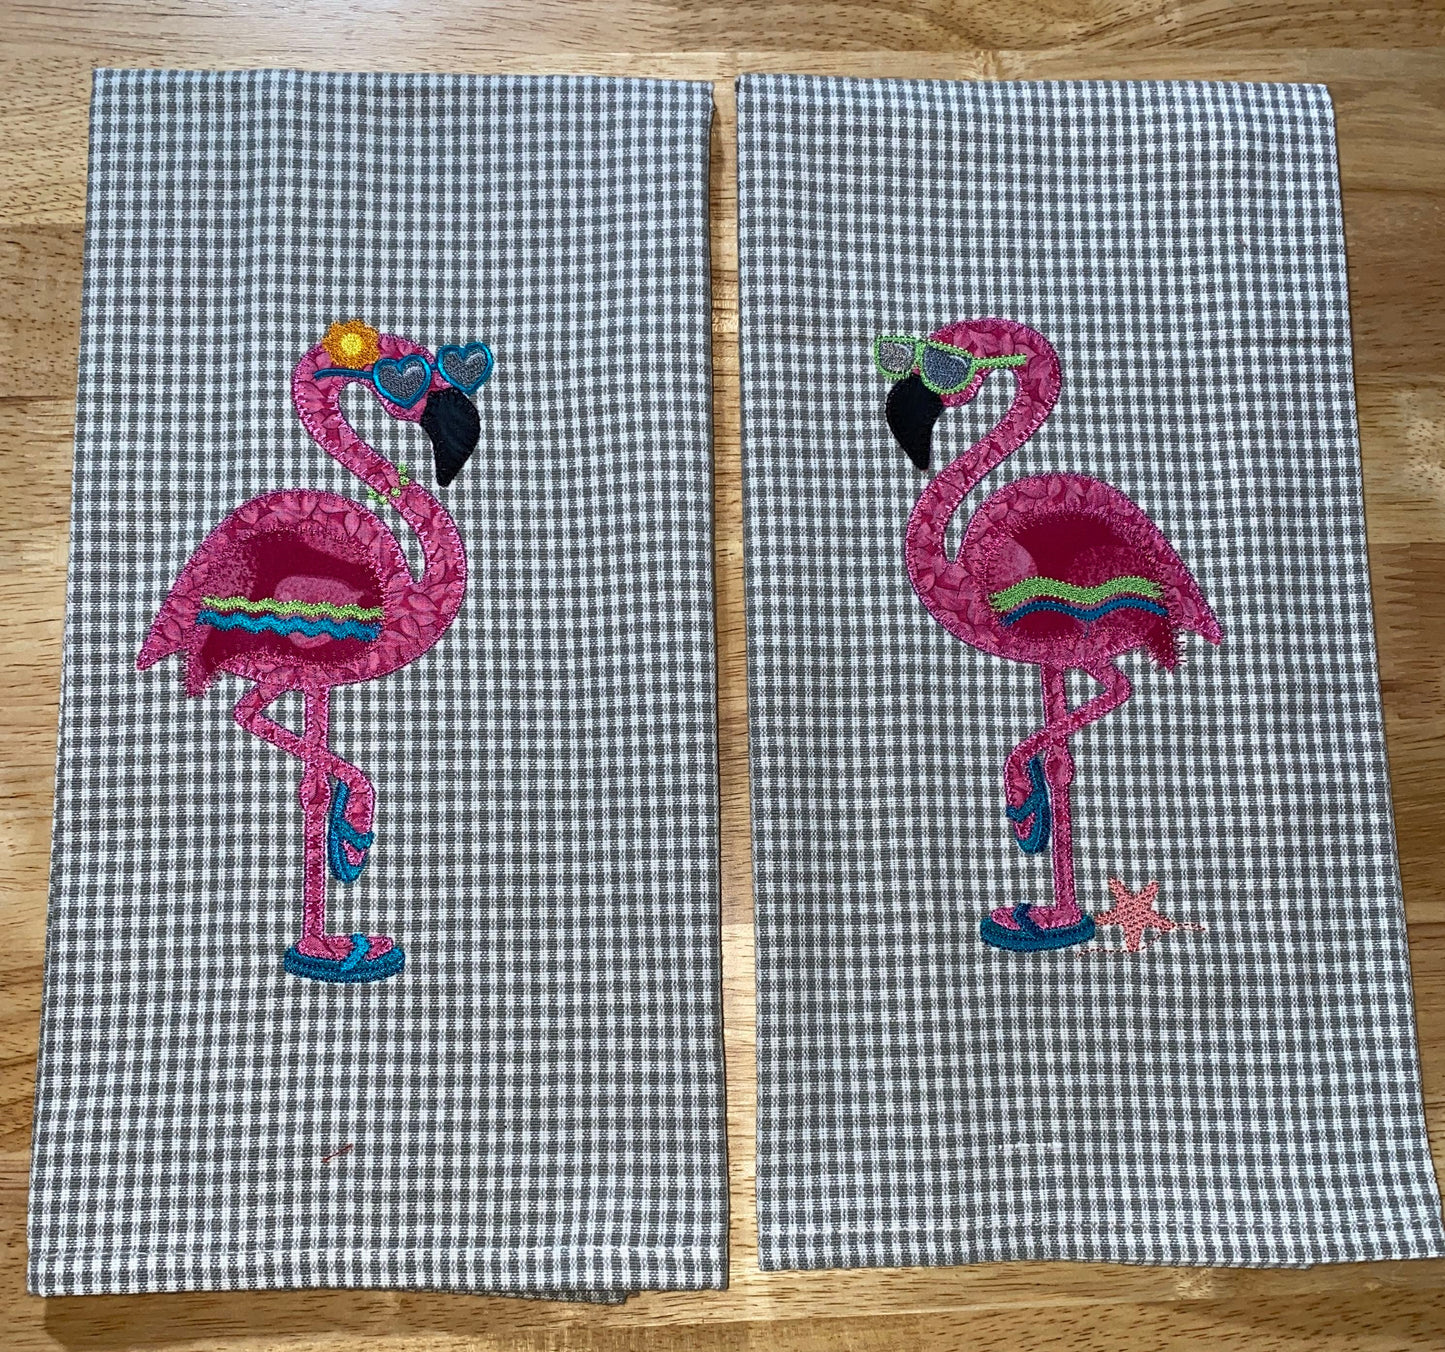 Flamingo Appliqued Dunroven House Towels (Left Towel)